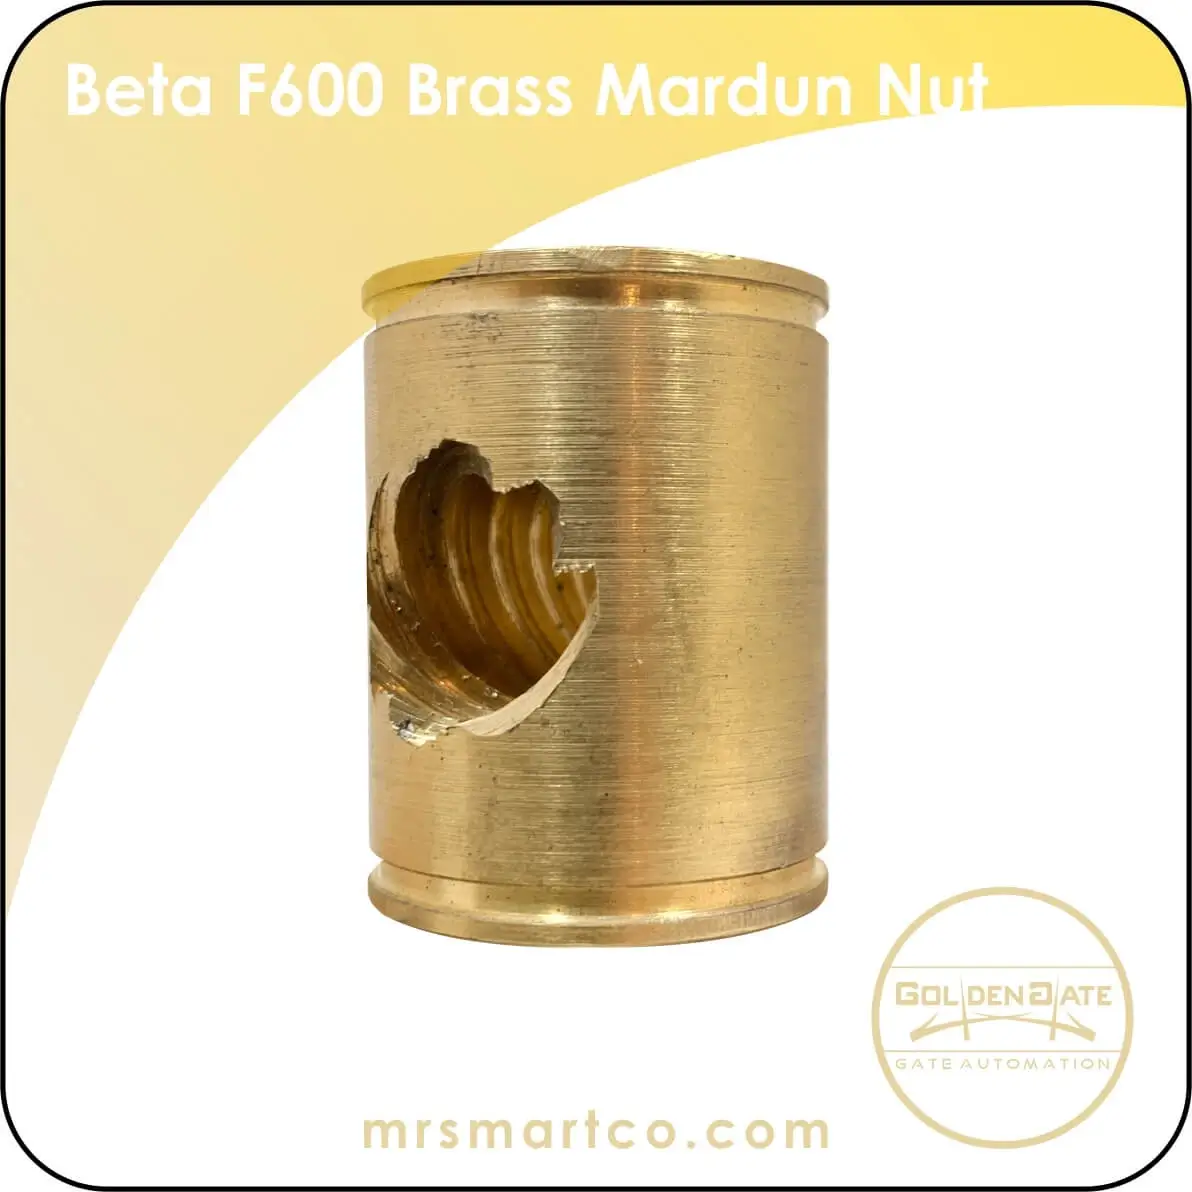 Beta F600 Brass Mardun Nut